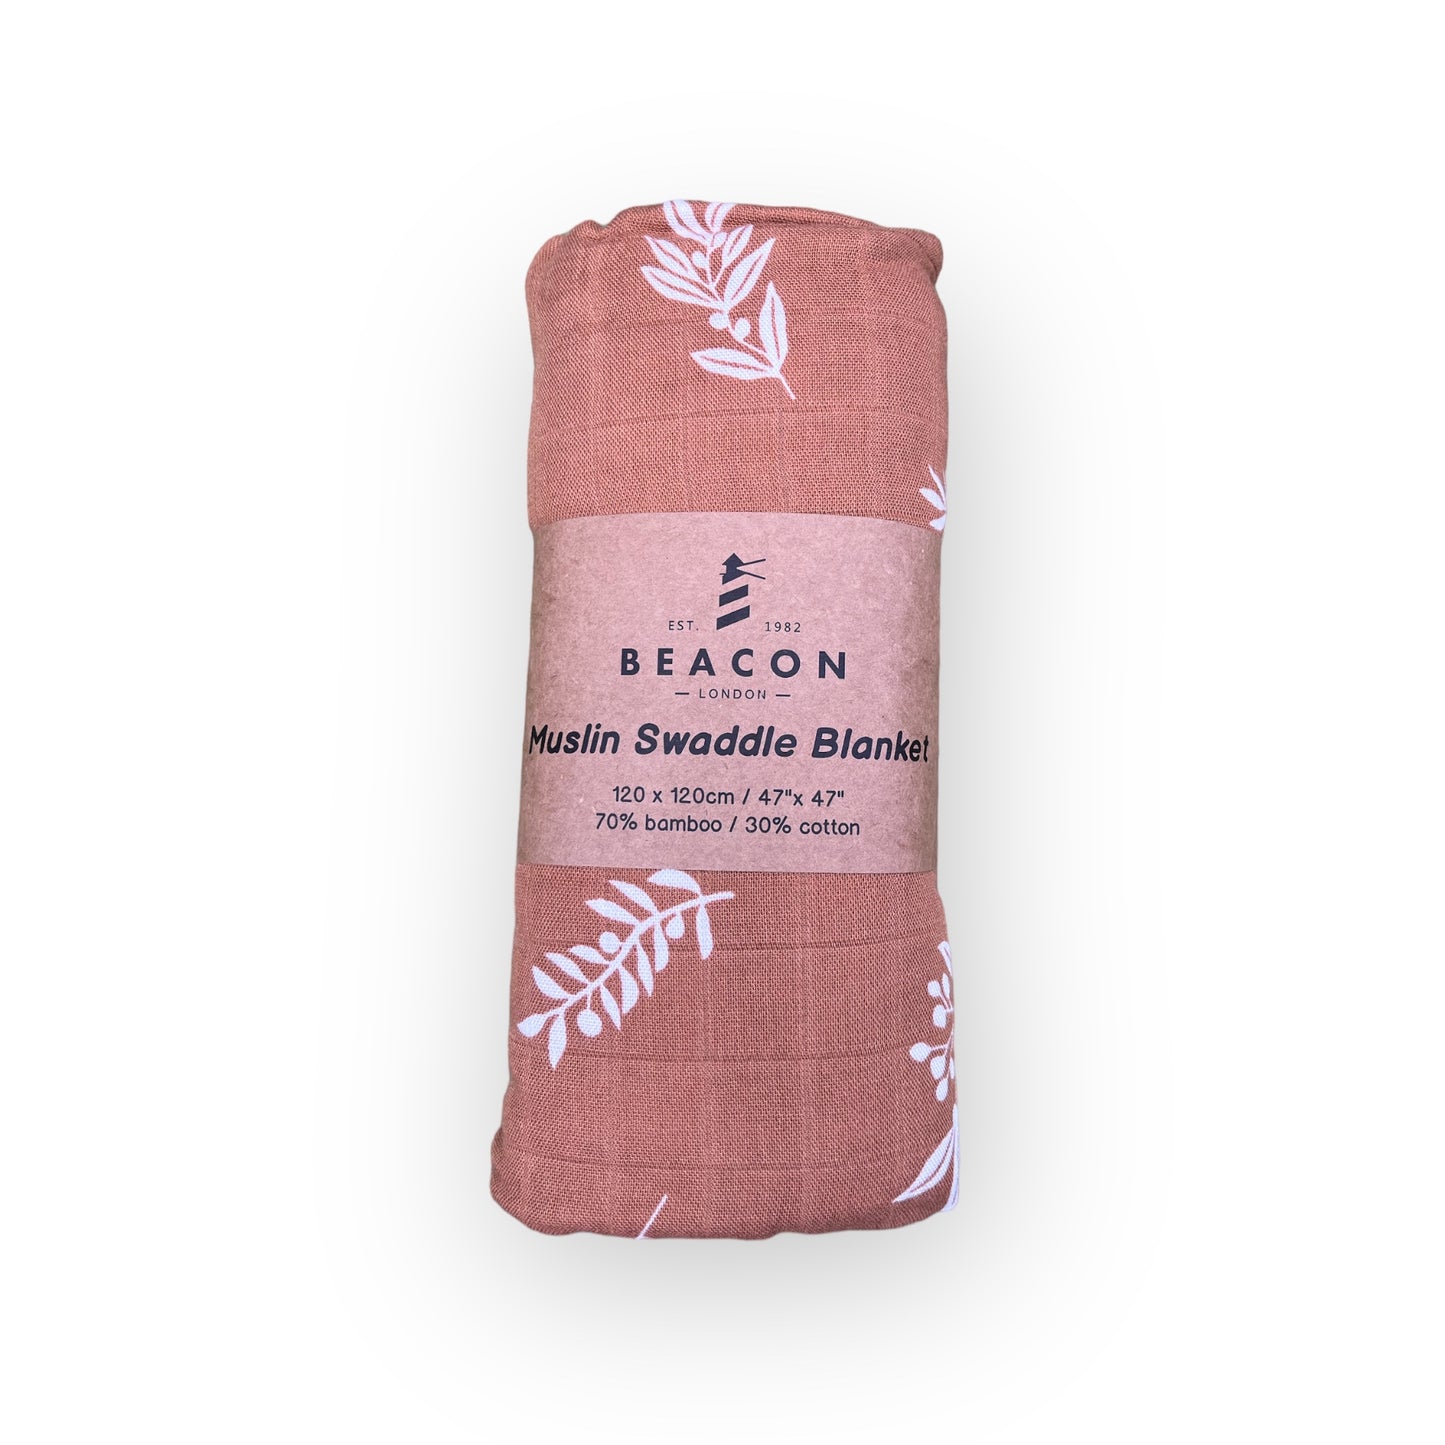 Muslin Bamboo Swaddle Blankets-Blankets-Beacon London-Floral-Beacon London